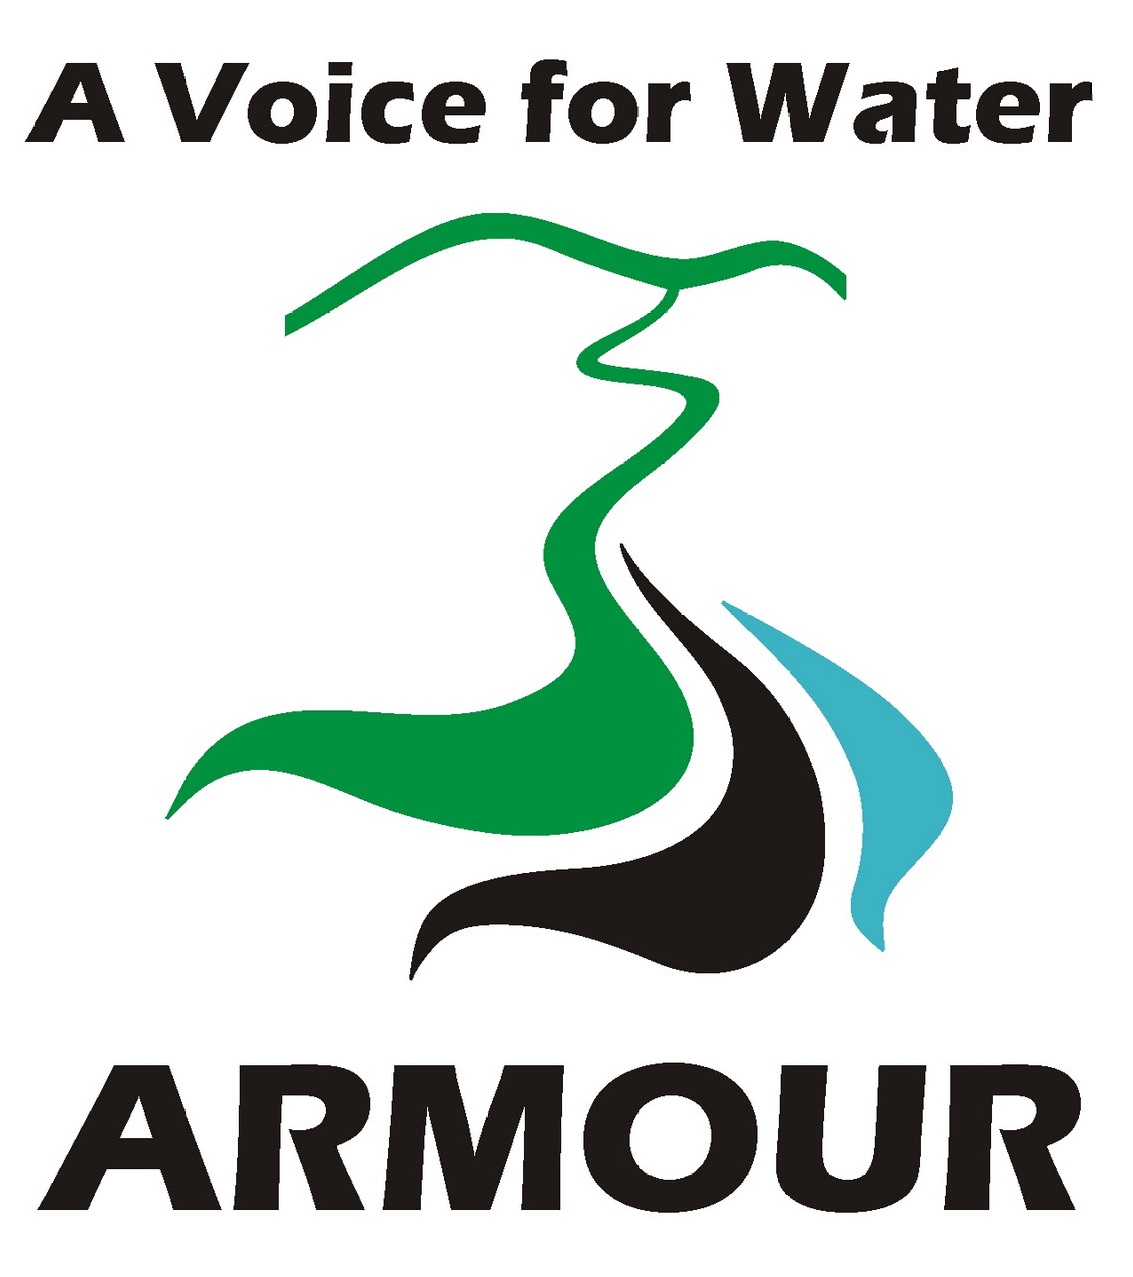 ARMOUR Logo & voice